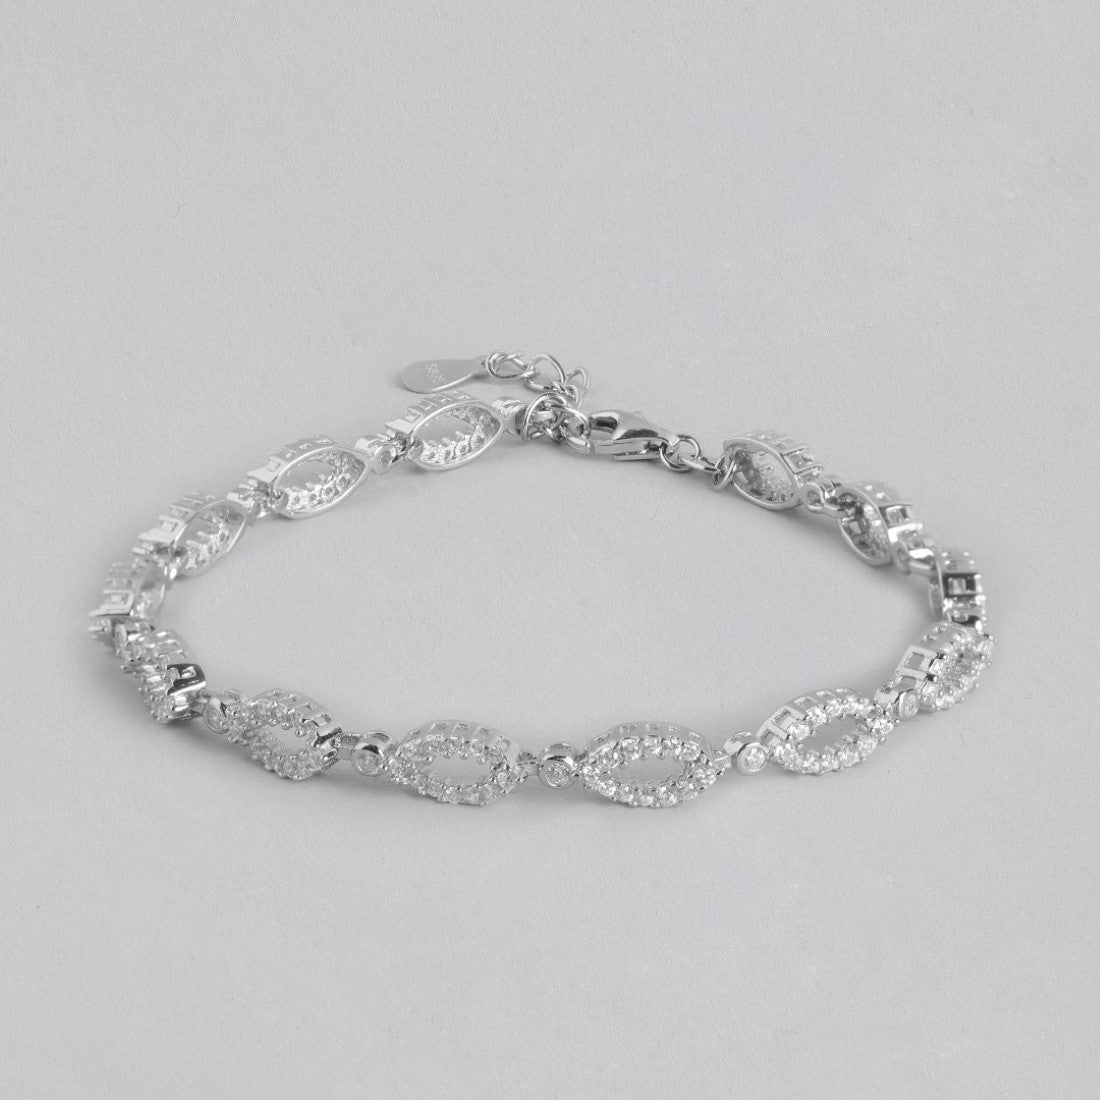 Oval CZ Radiance Rhodium-Plated 925 Sterling Silver Bracelet